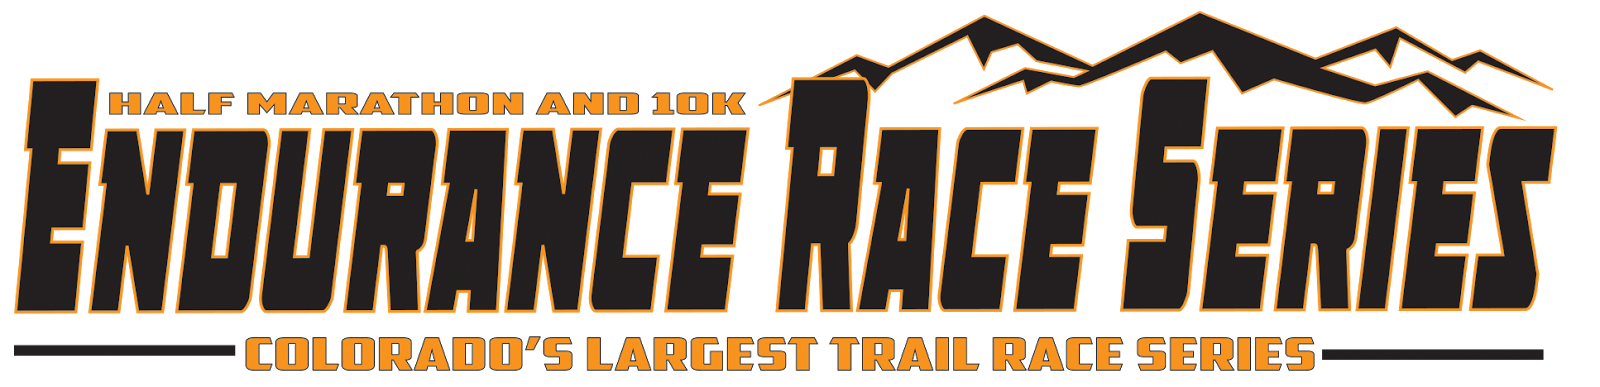 Endurance Trail Race Series Ambassador  Discount Code: LJOHNSON15